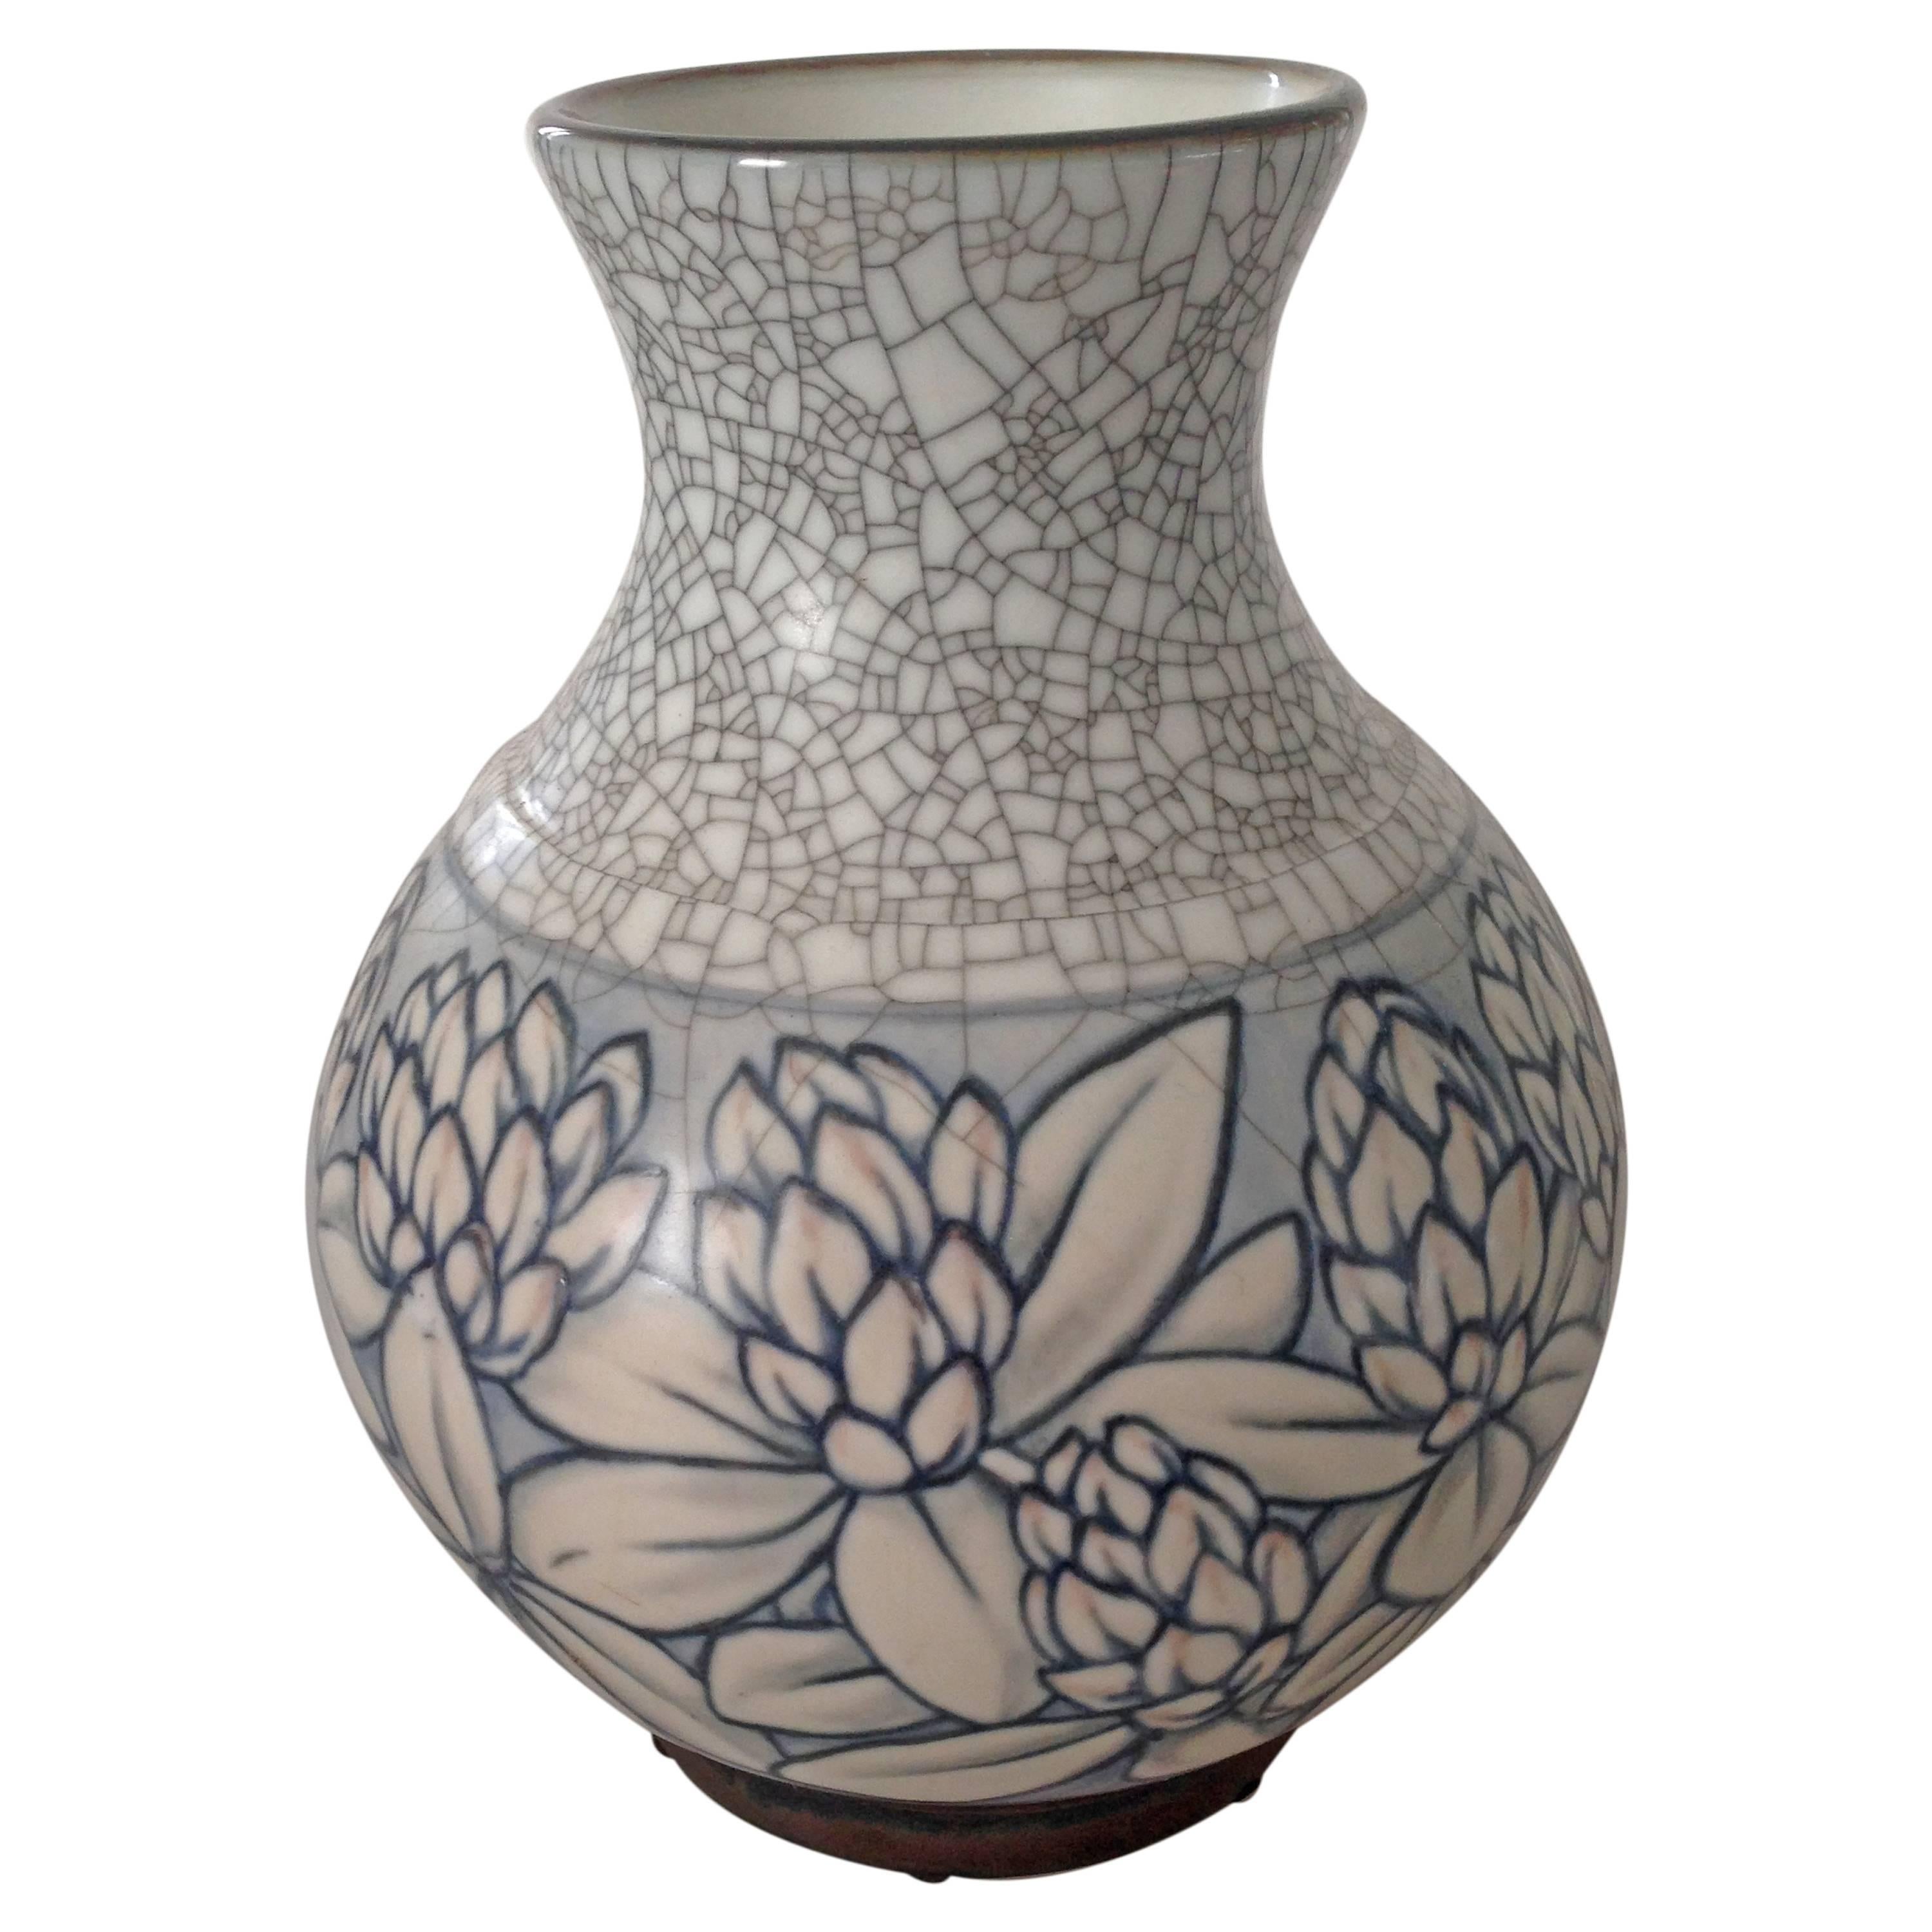 Bing & Grondahl Art Nouveau Vase by Effie Hegermann-Lindencrone For Sale